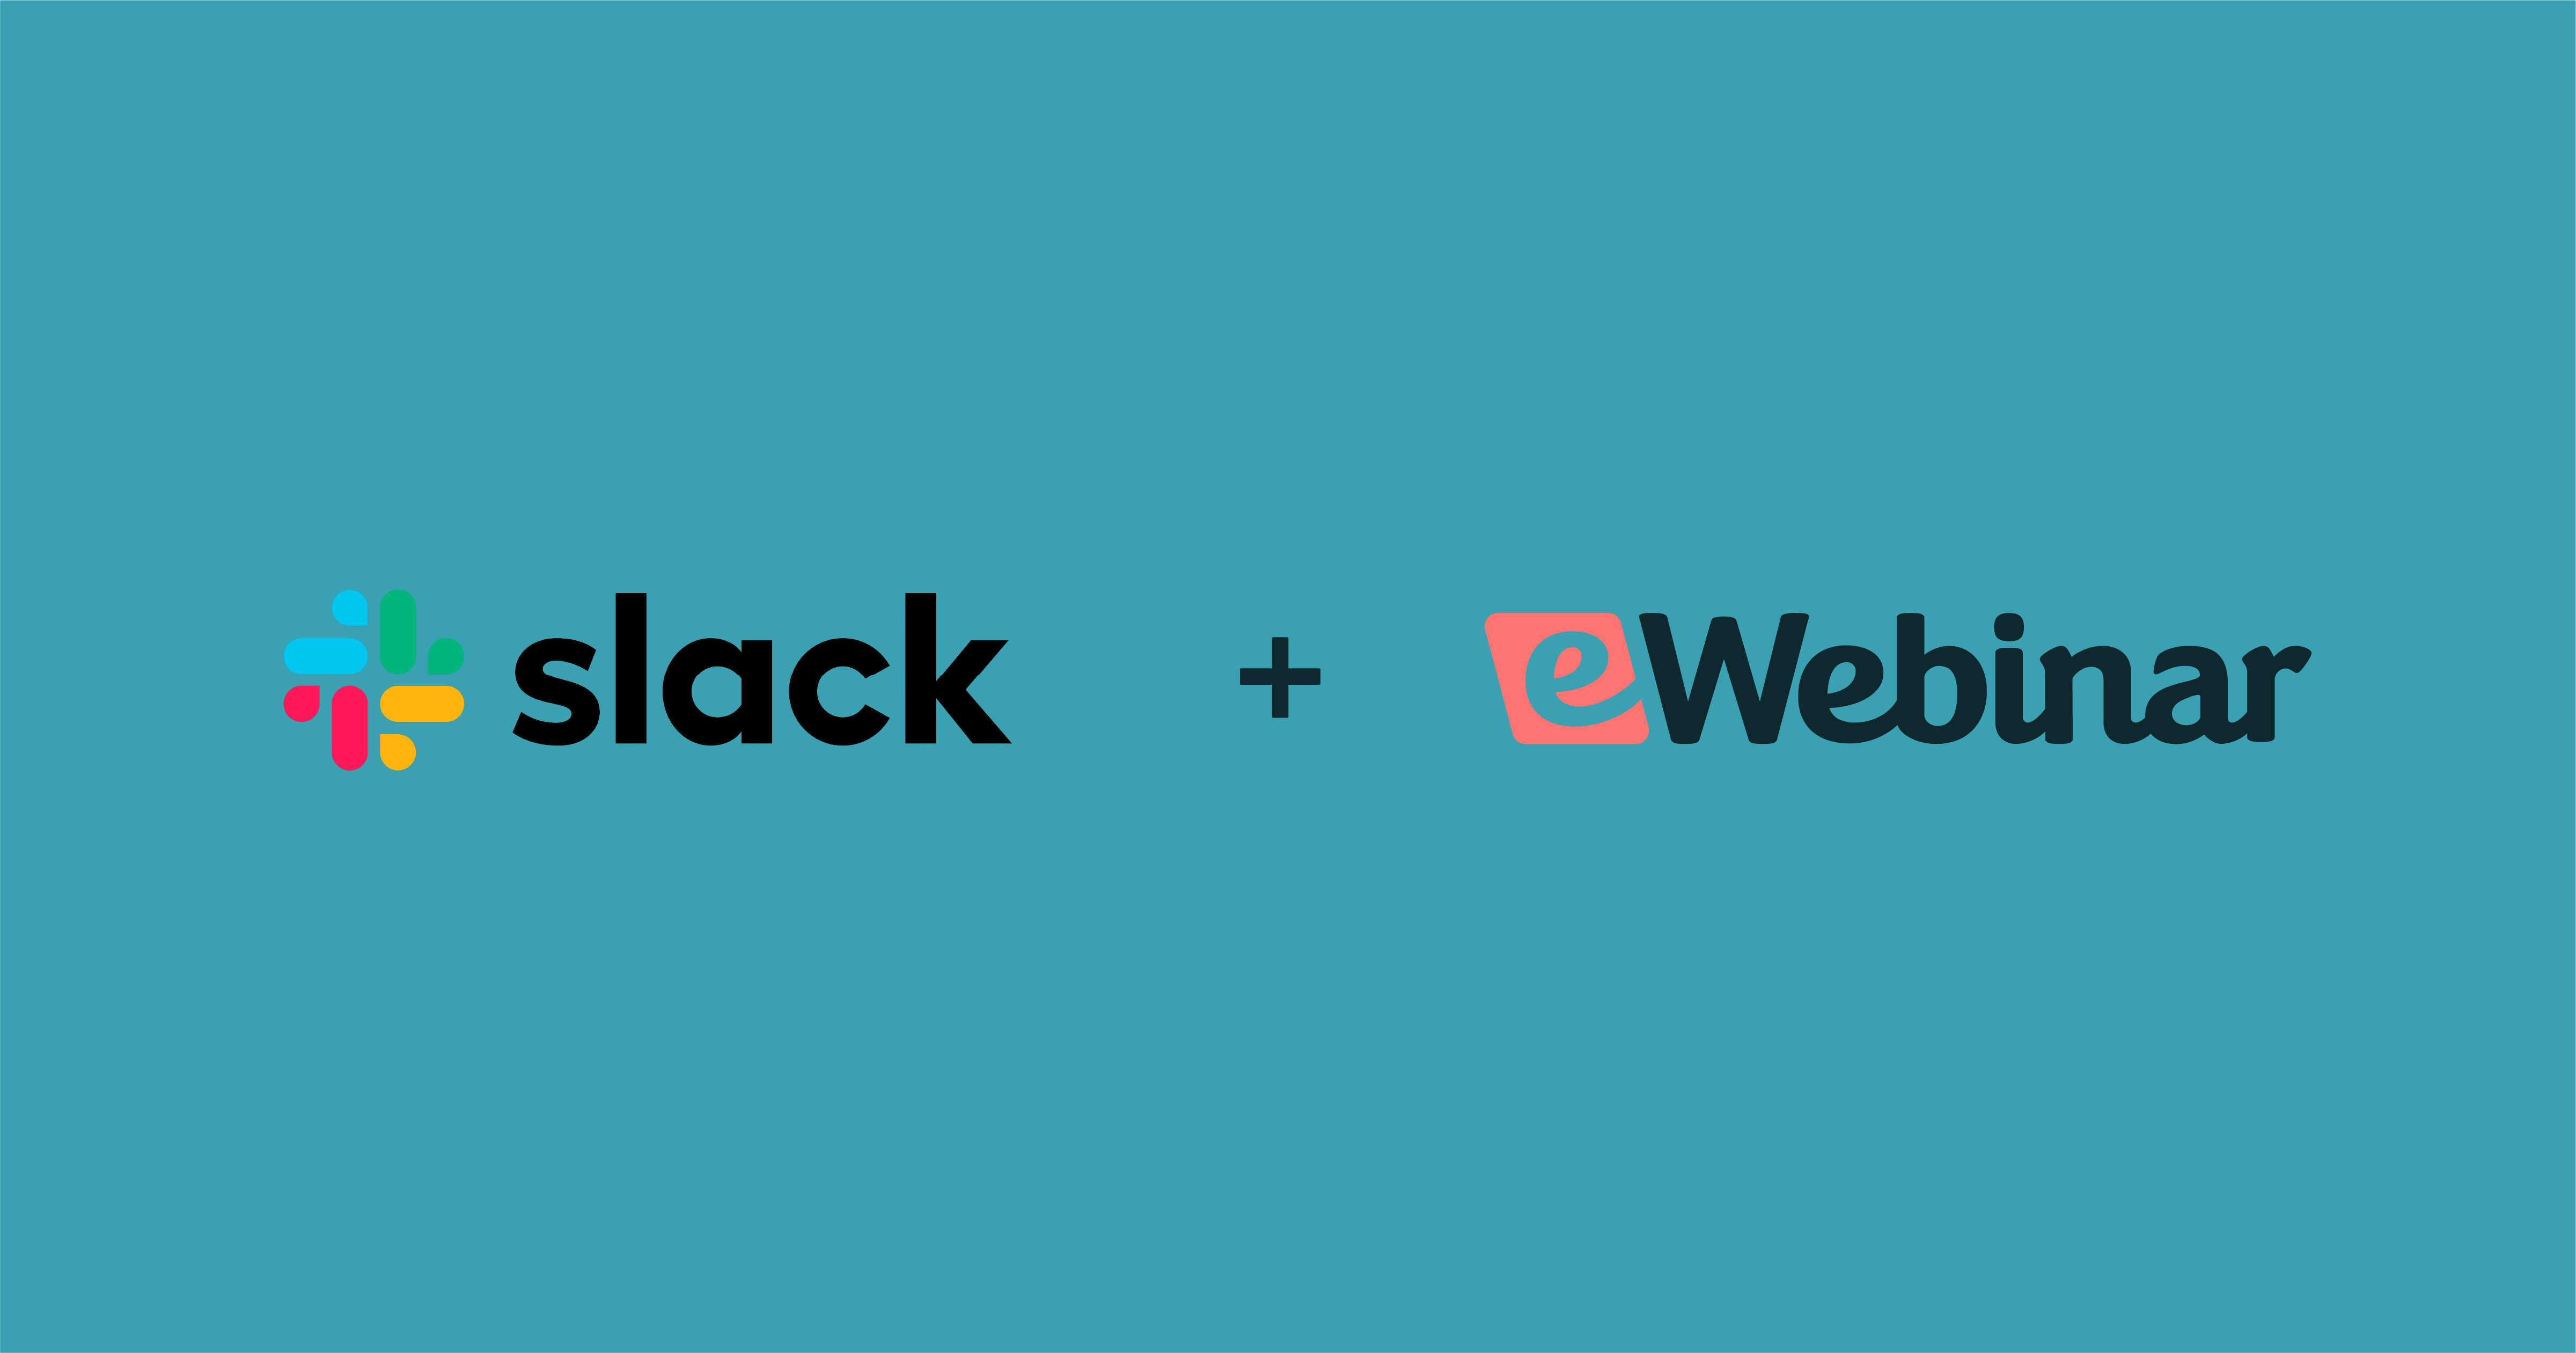 eWebinar Integrates with Slack